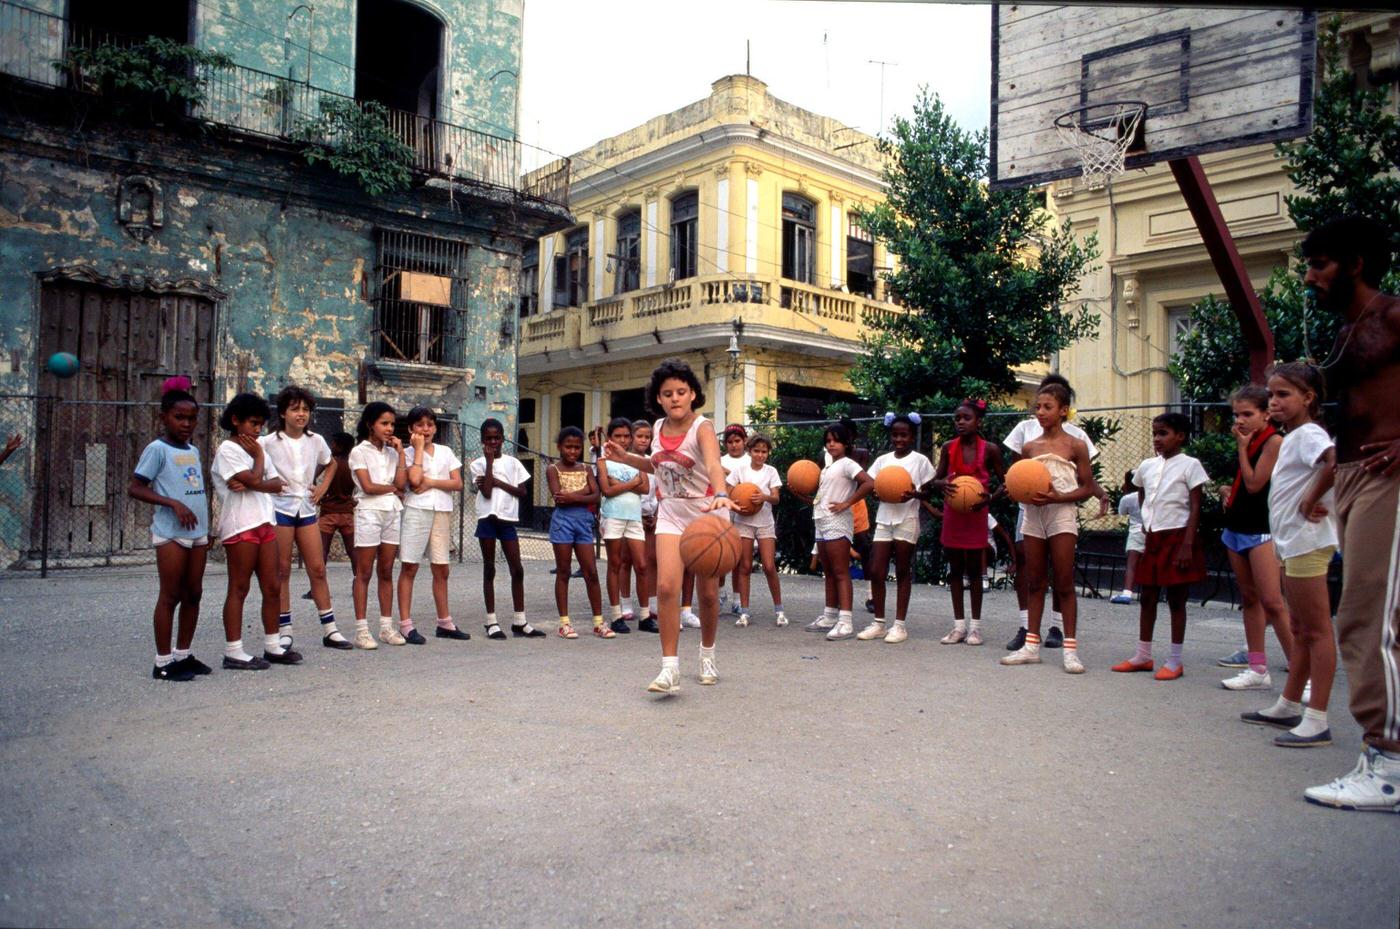 Cuban schoolchildren at a girls' school practicing basketball in Havana, Cuba, 1991.